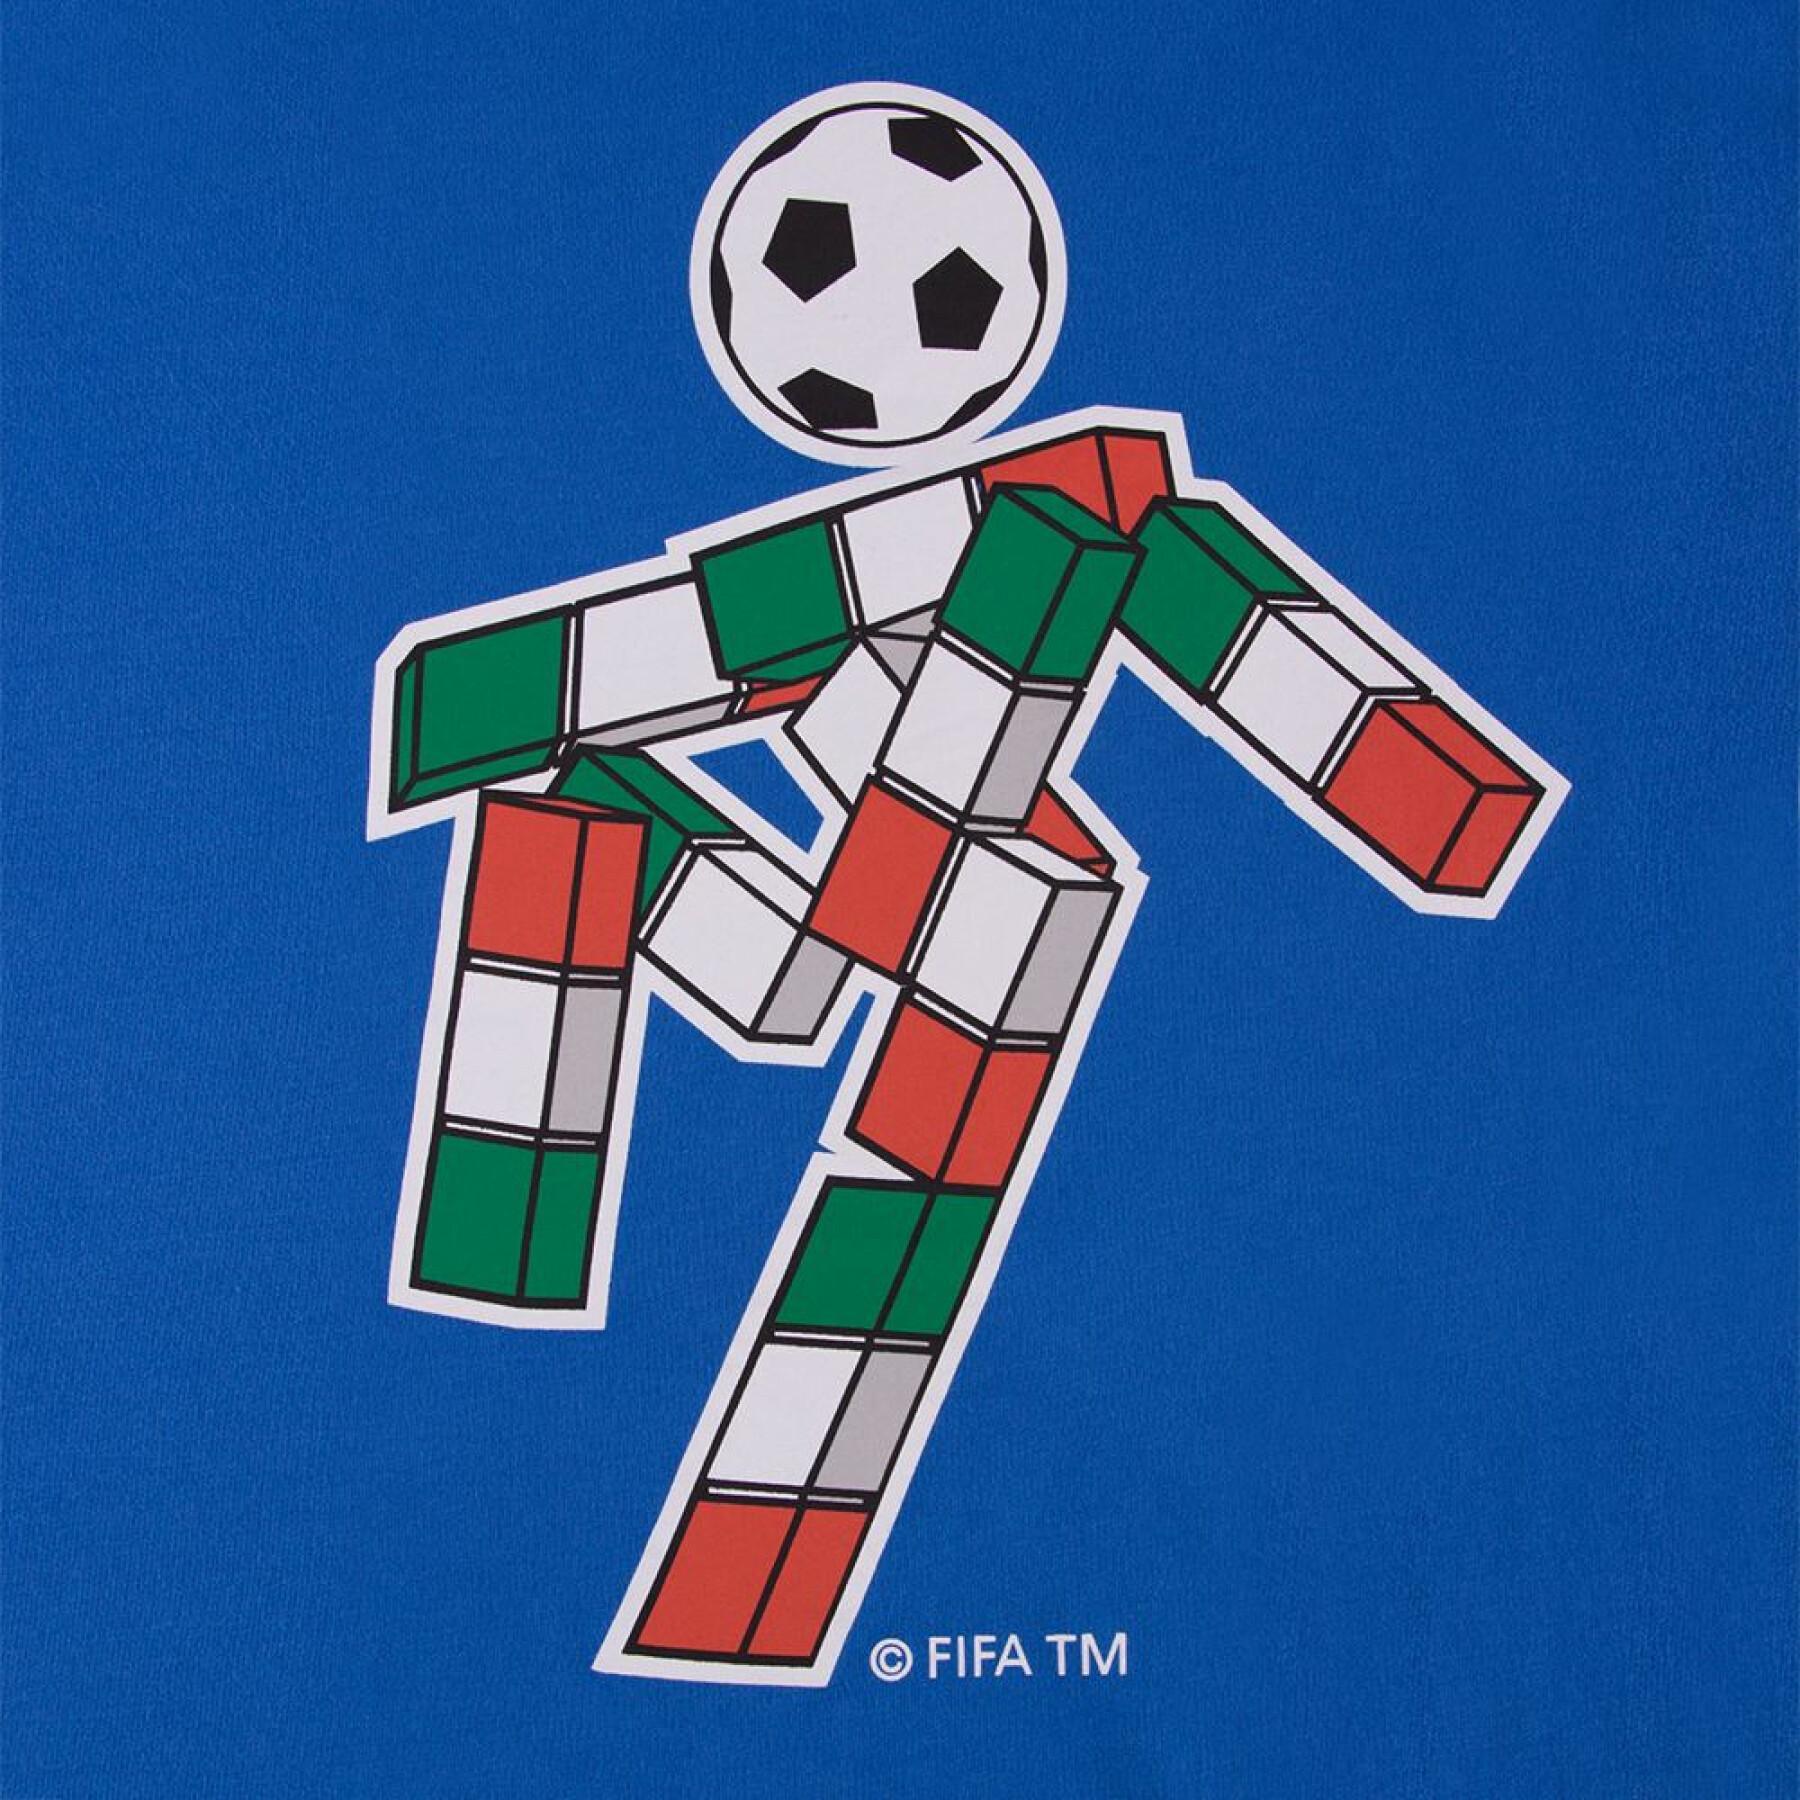 Child's T-shirt Copa Italie World Cup Mascot 1990